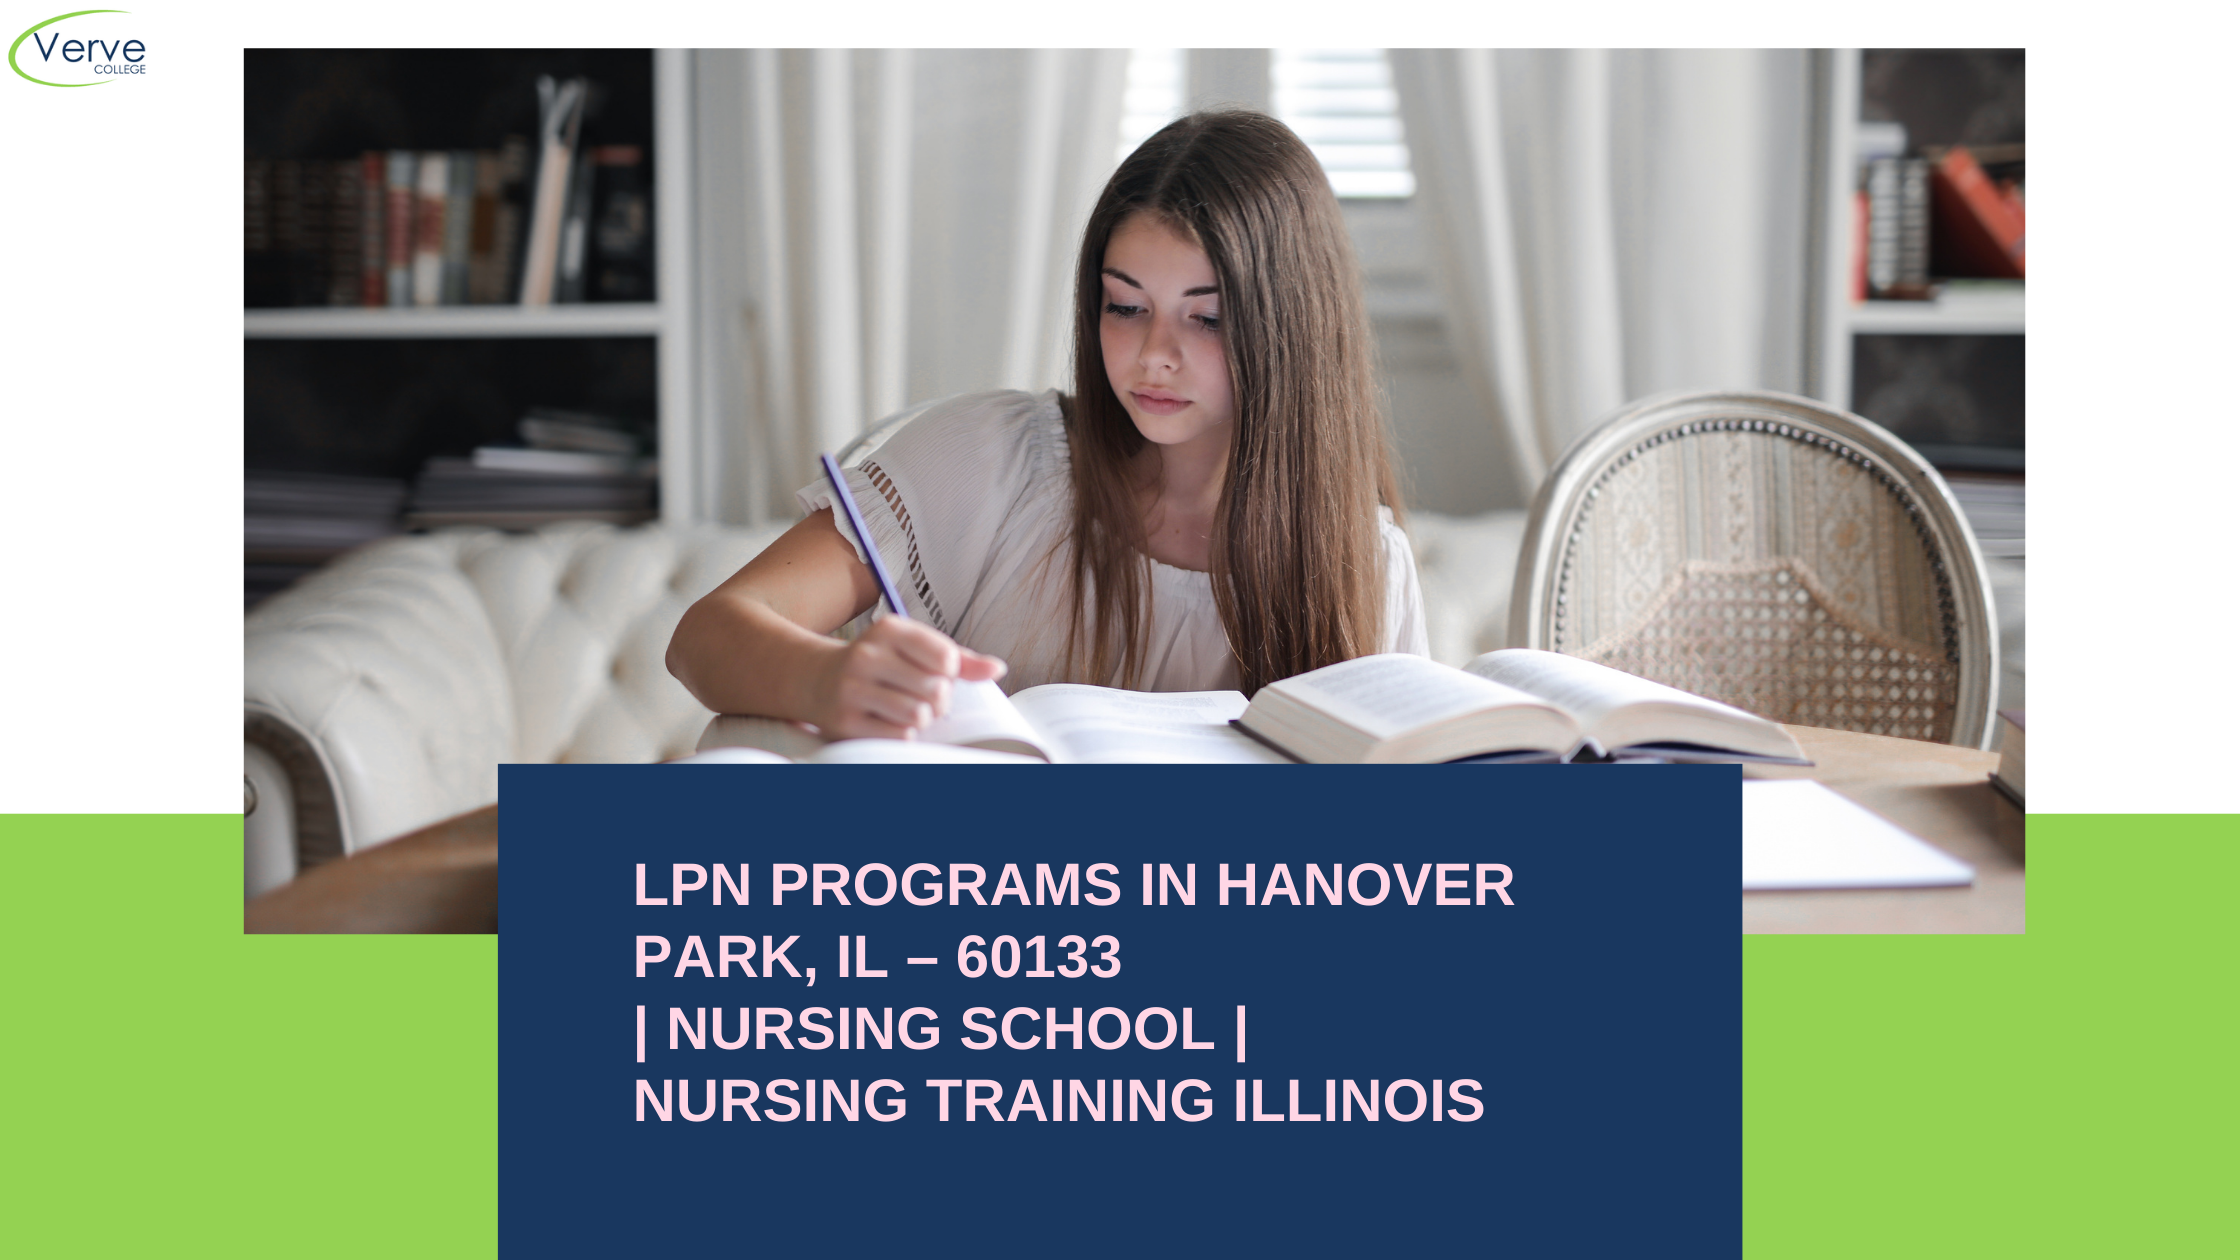 LPN Programs in Hanover Park, IL – 60133 | Nursing School | Nursing Training Illinois